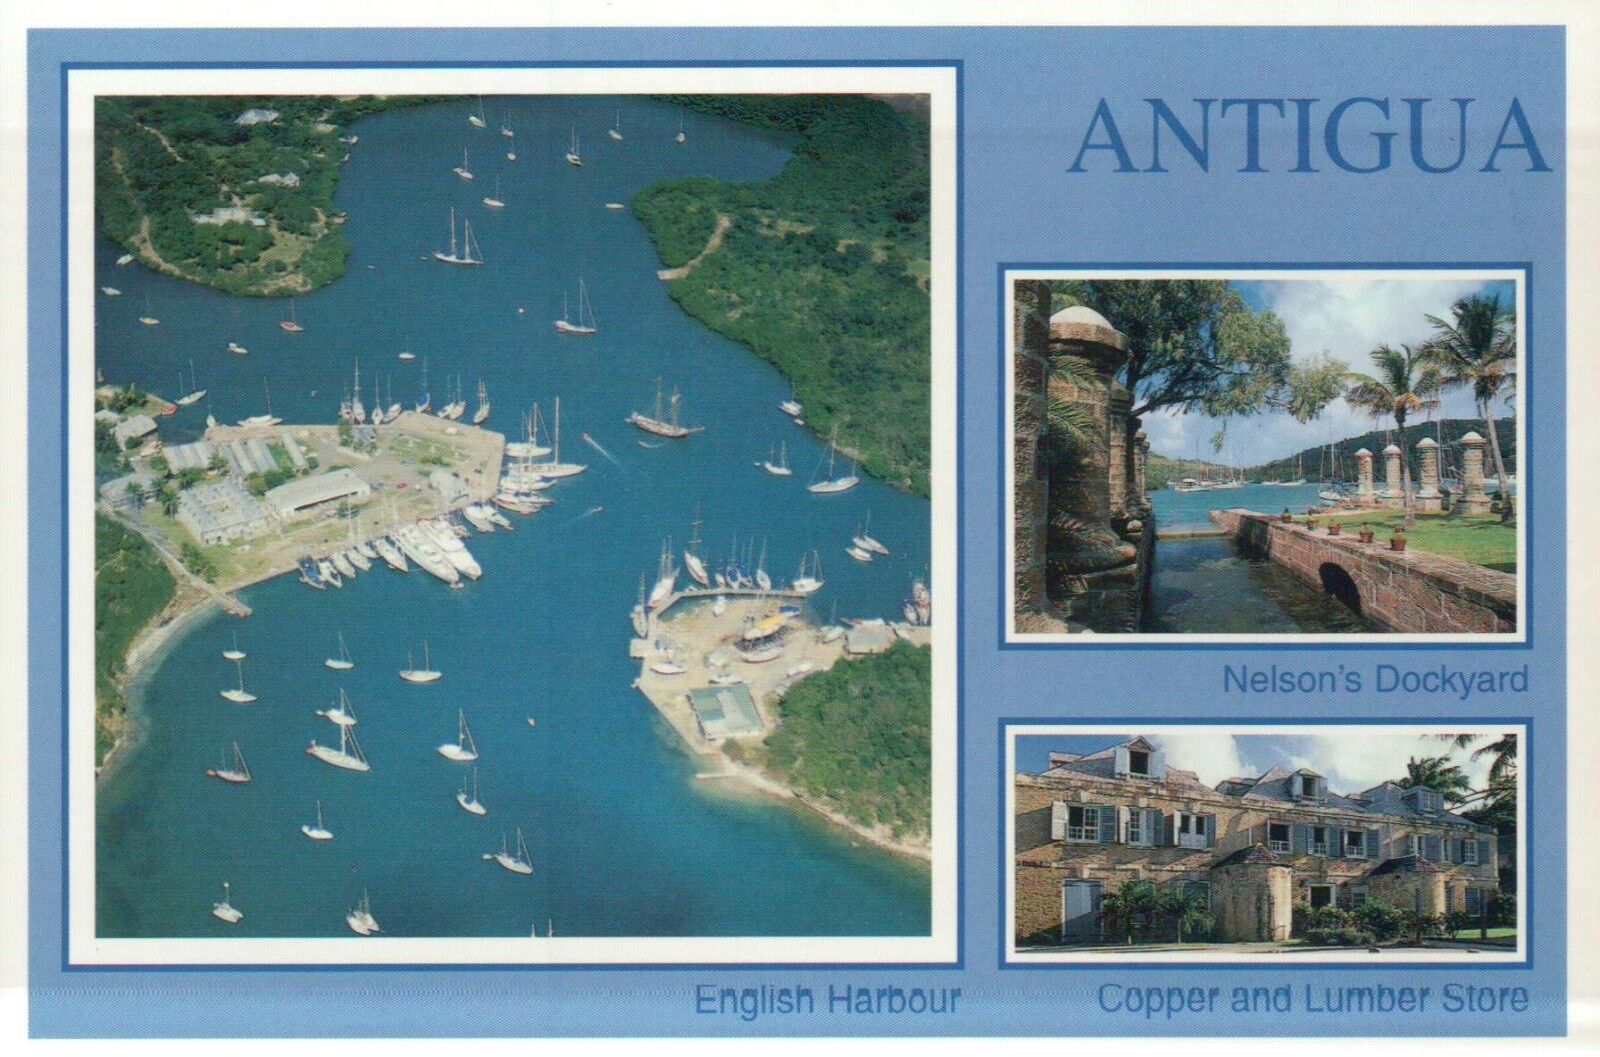 English Harbour, Nelson\'s Dockyard, Copper Lumber, Antigua, Caribbean - Postcard